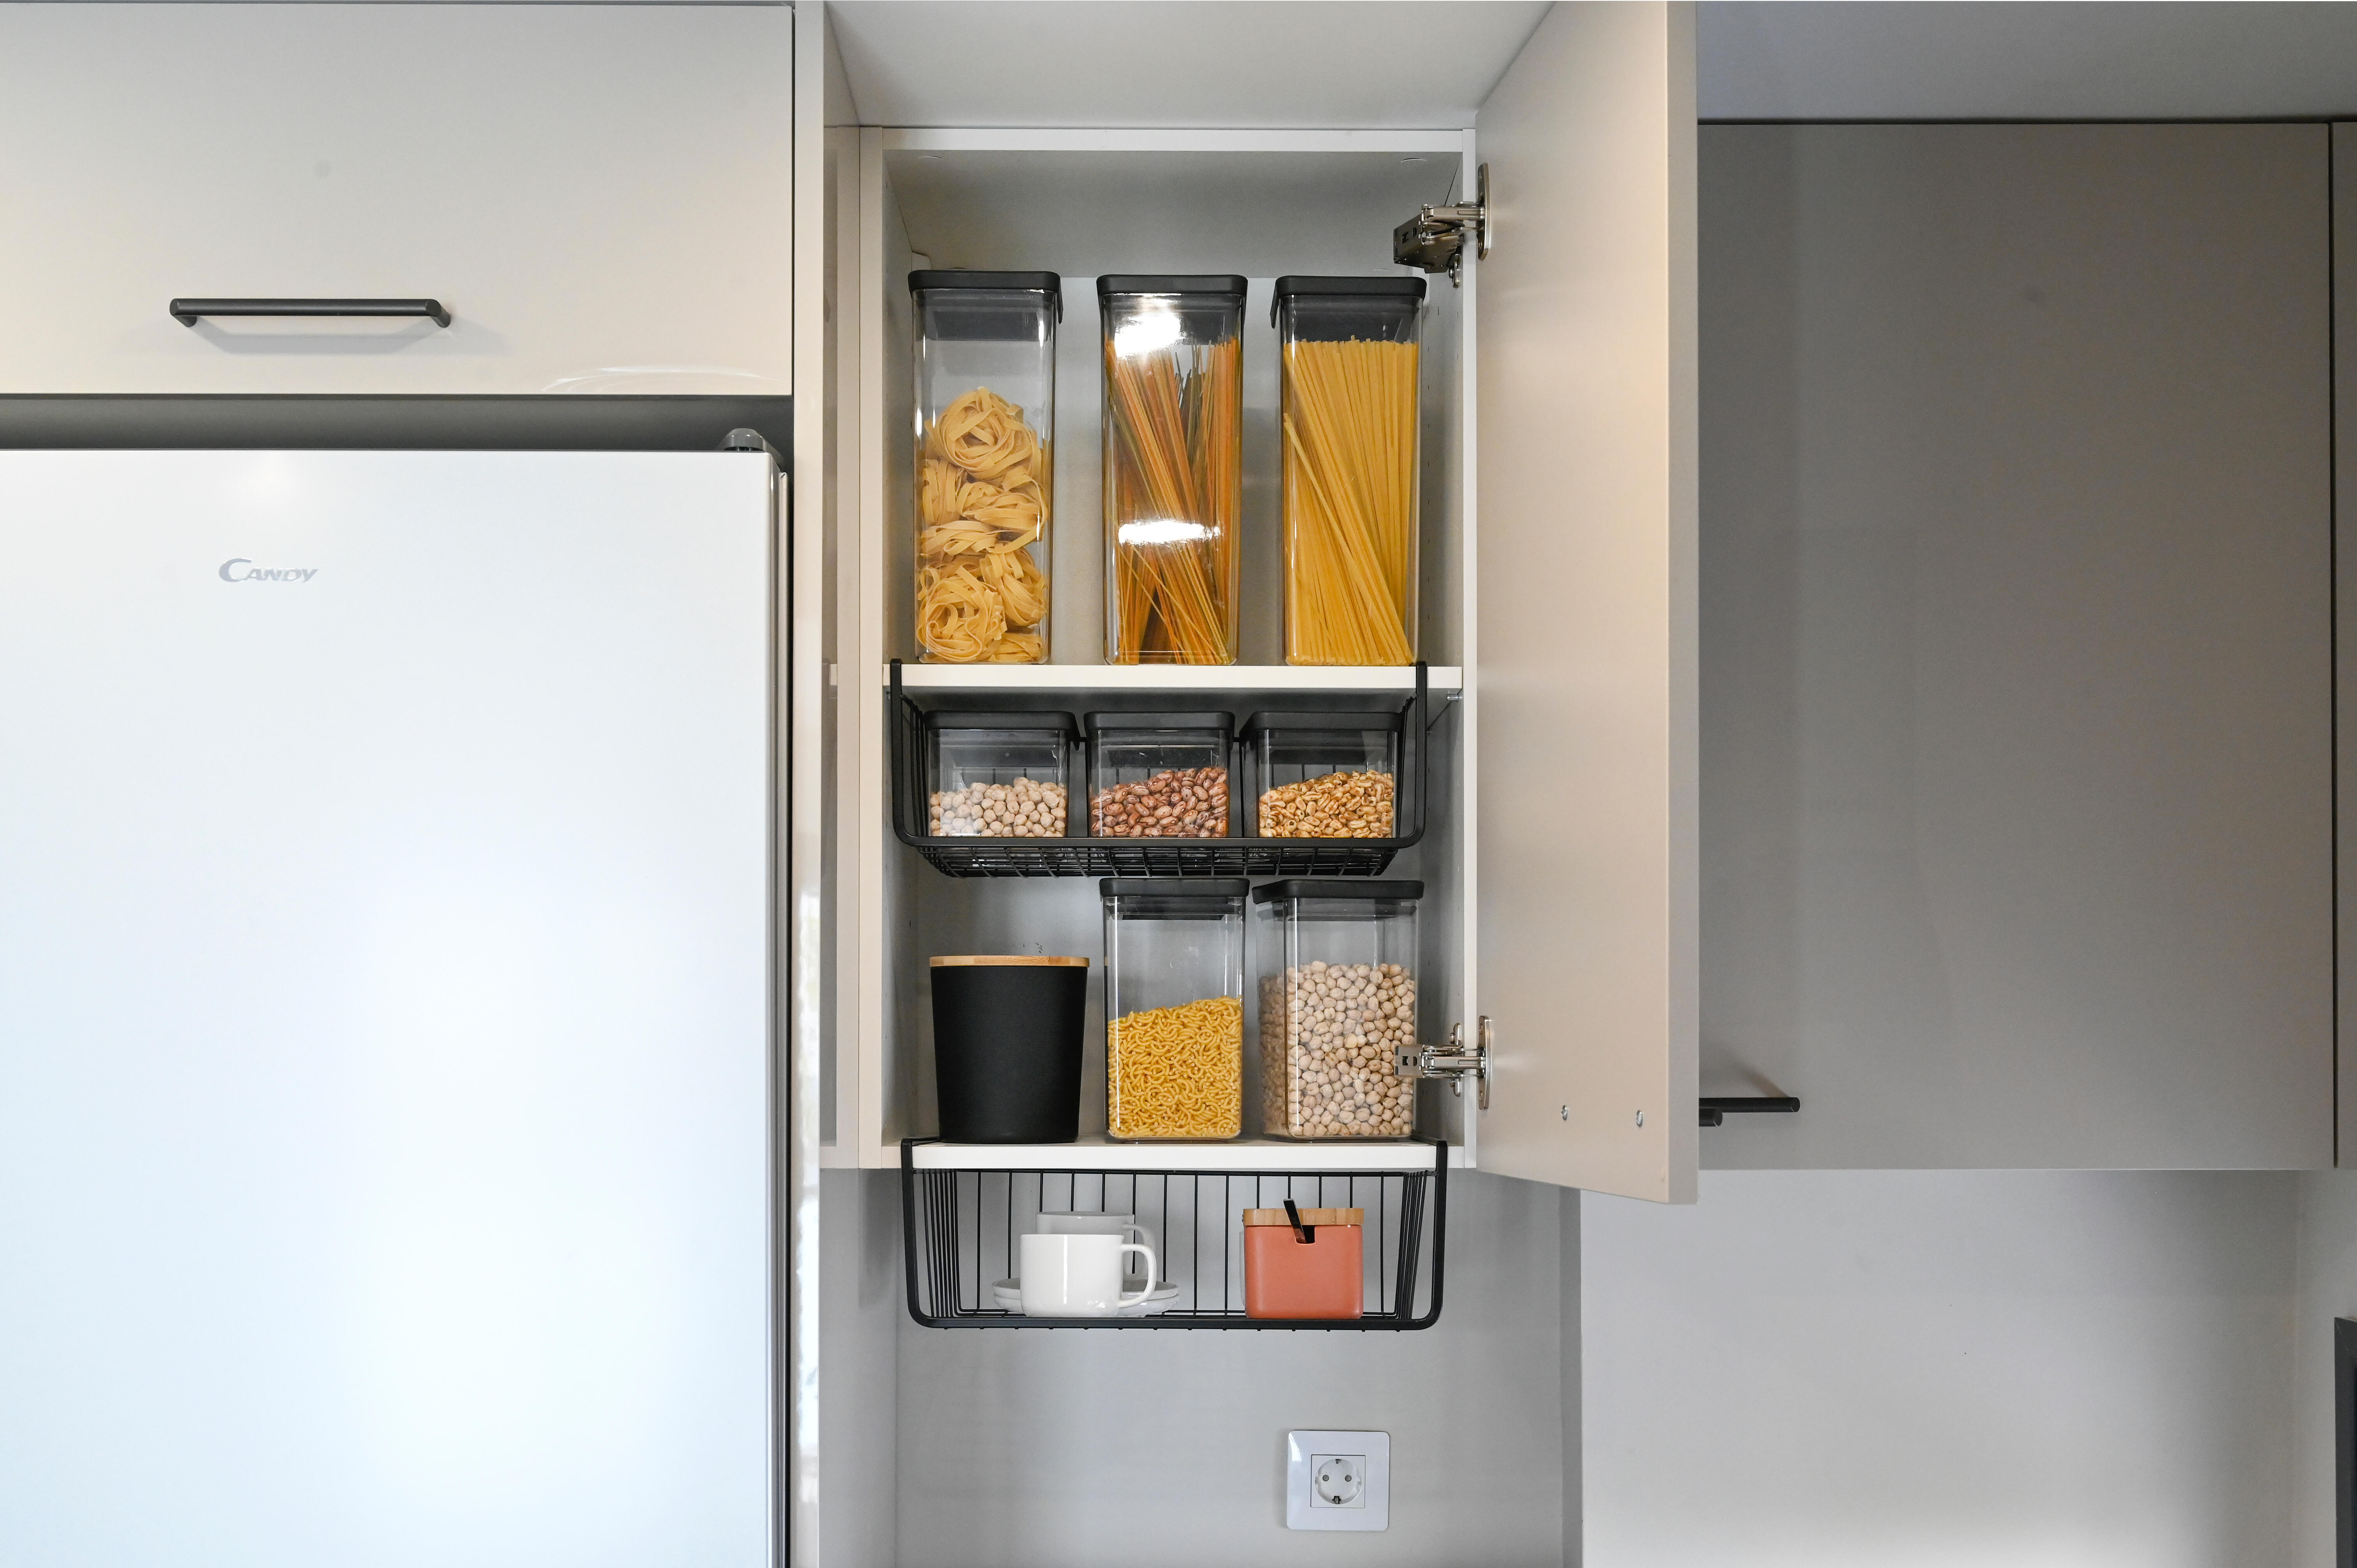 Organizador Refrigerador Profundo 36 x 10,4 cm - Casa en orden